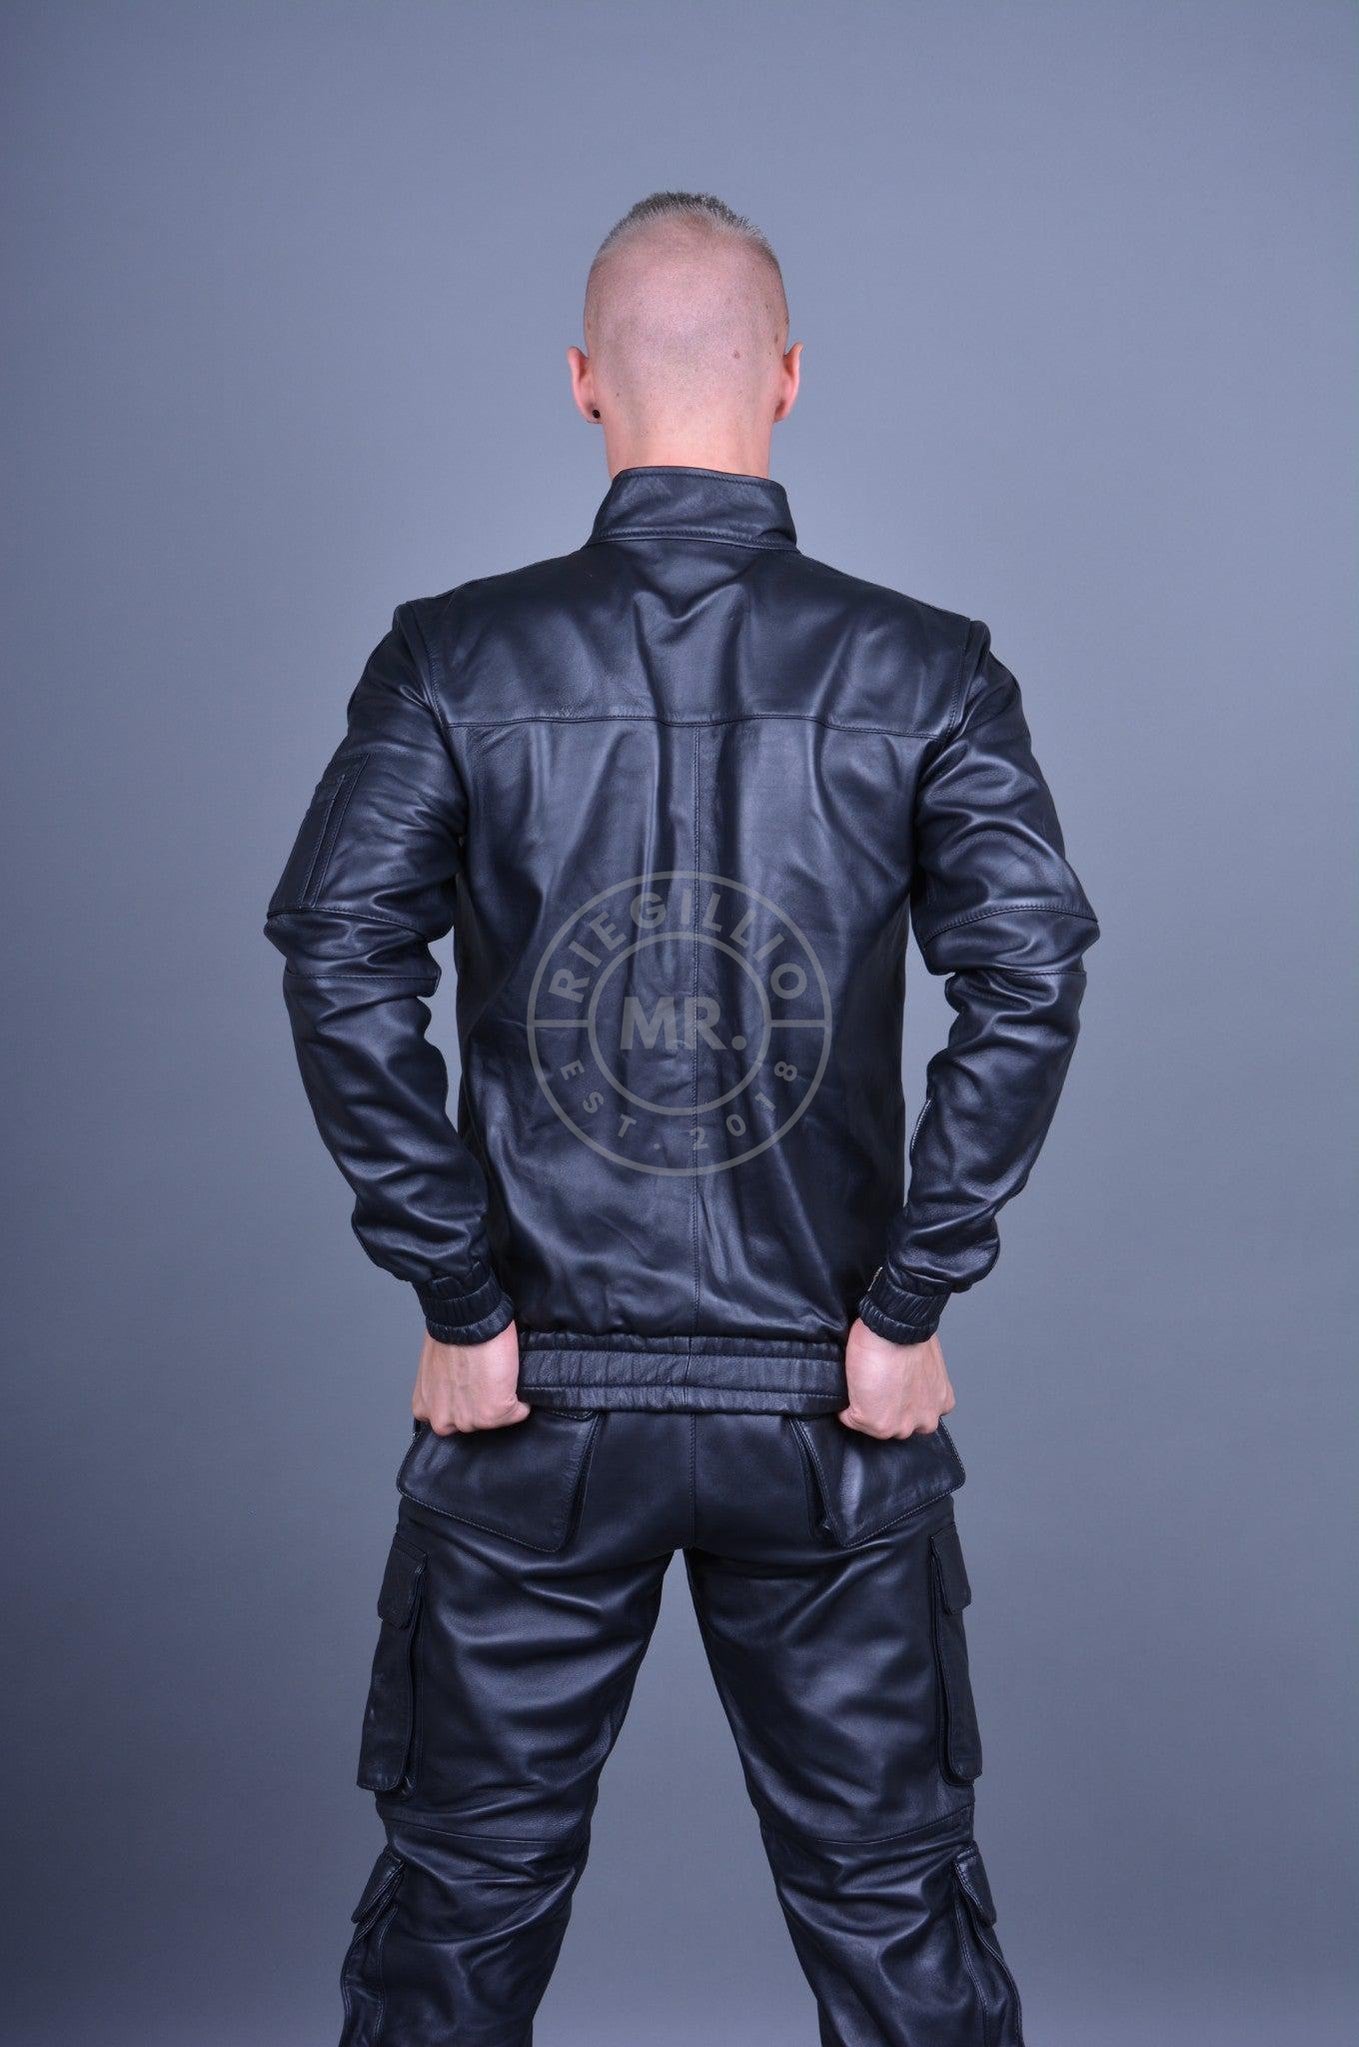 Black Leather Utility Jacket at MR. Riegillio